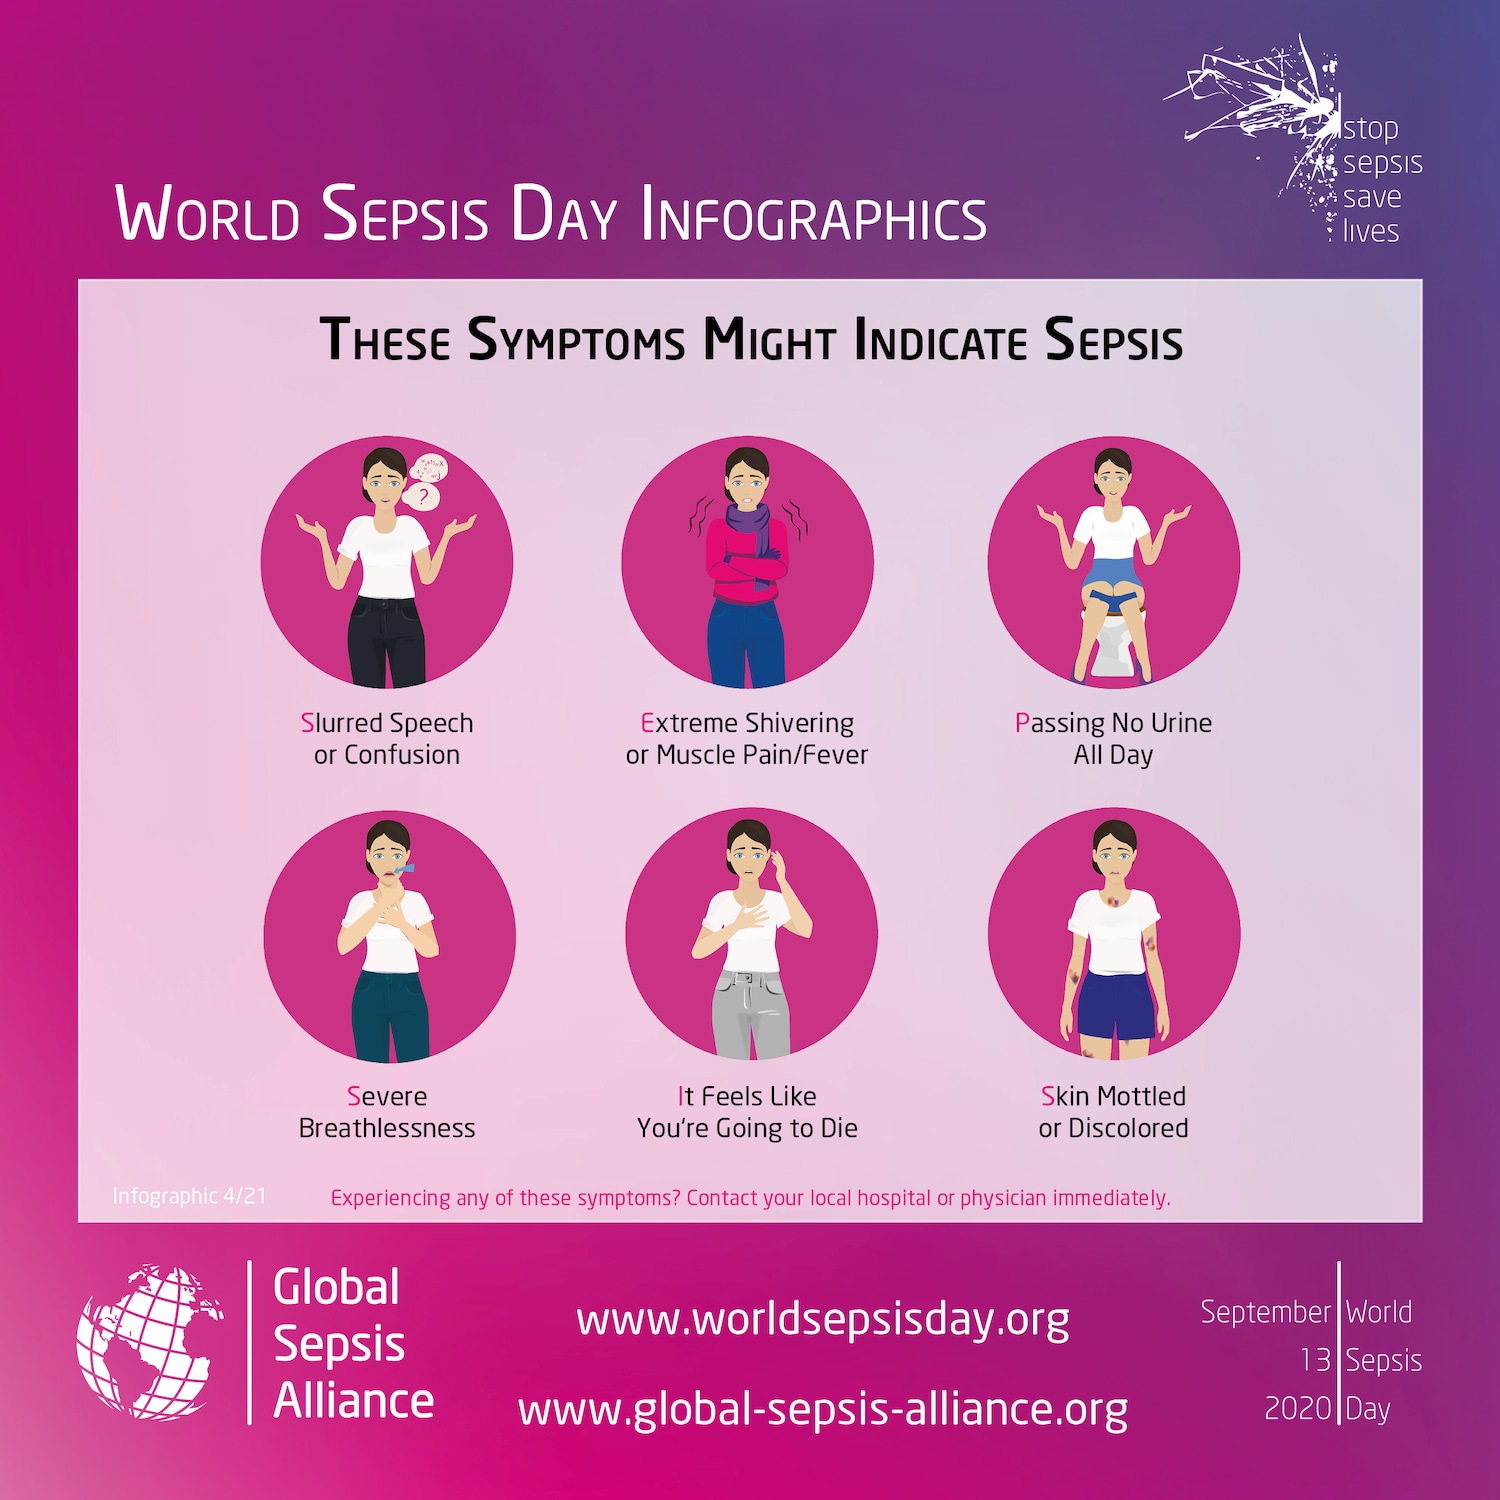 World Sepsis Day Infographic | Hugh James